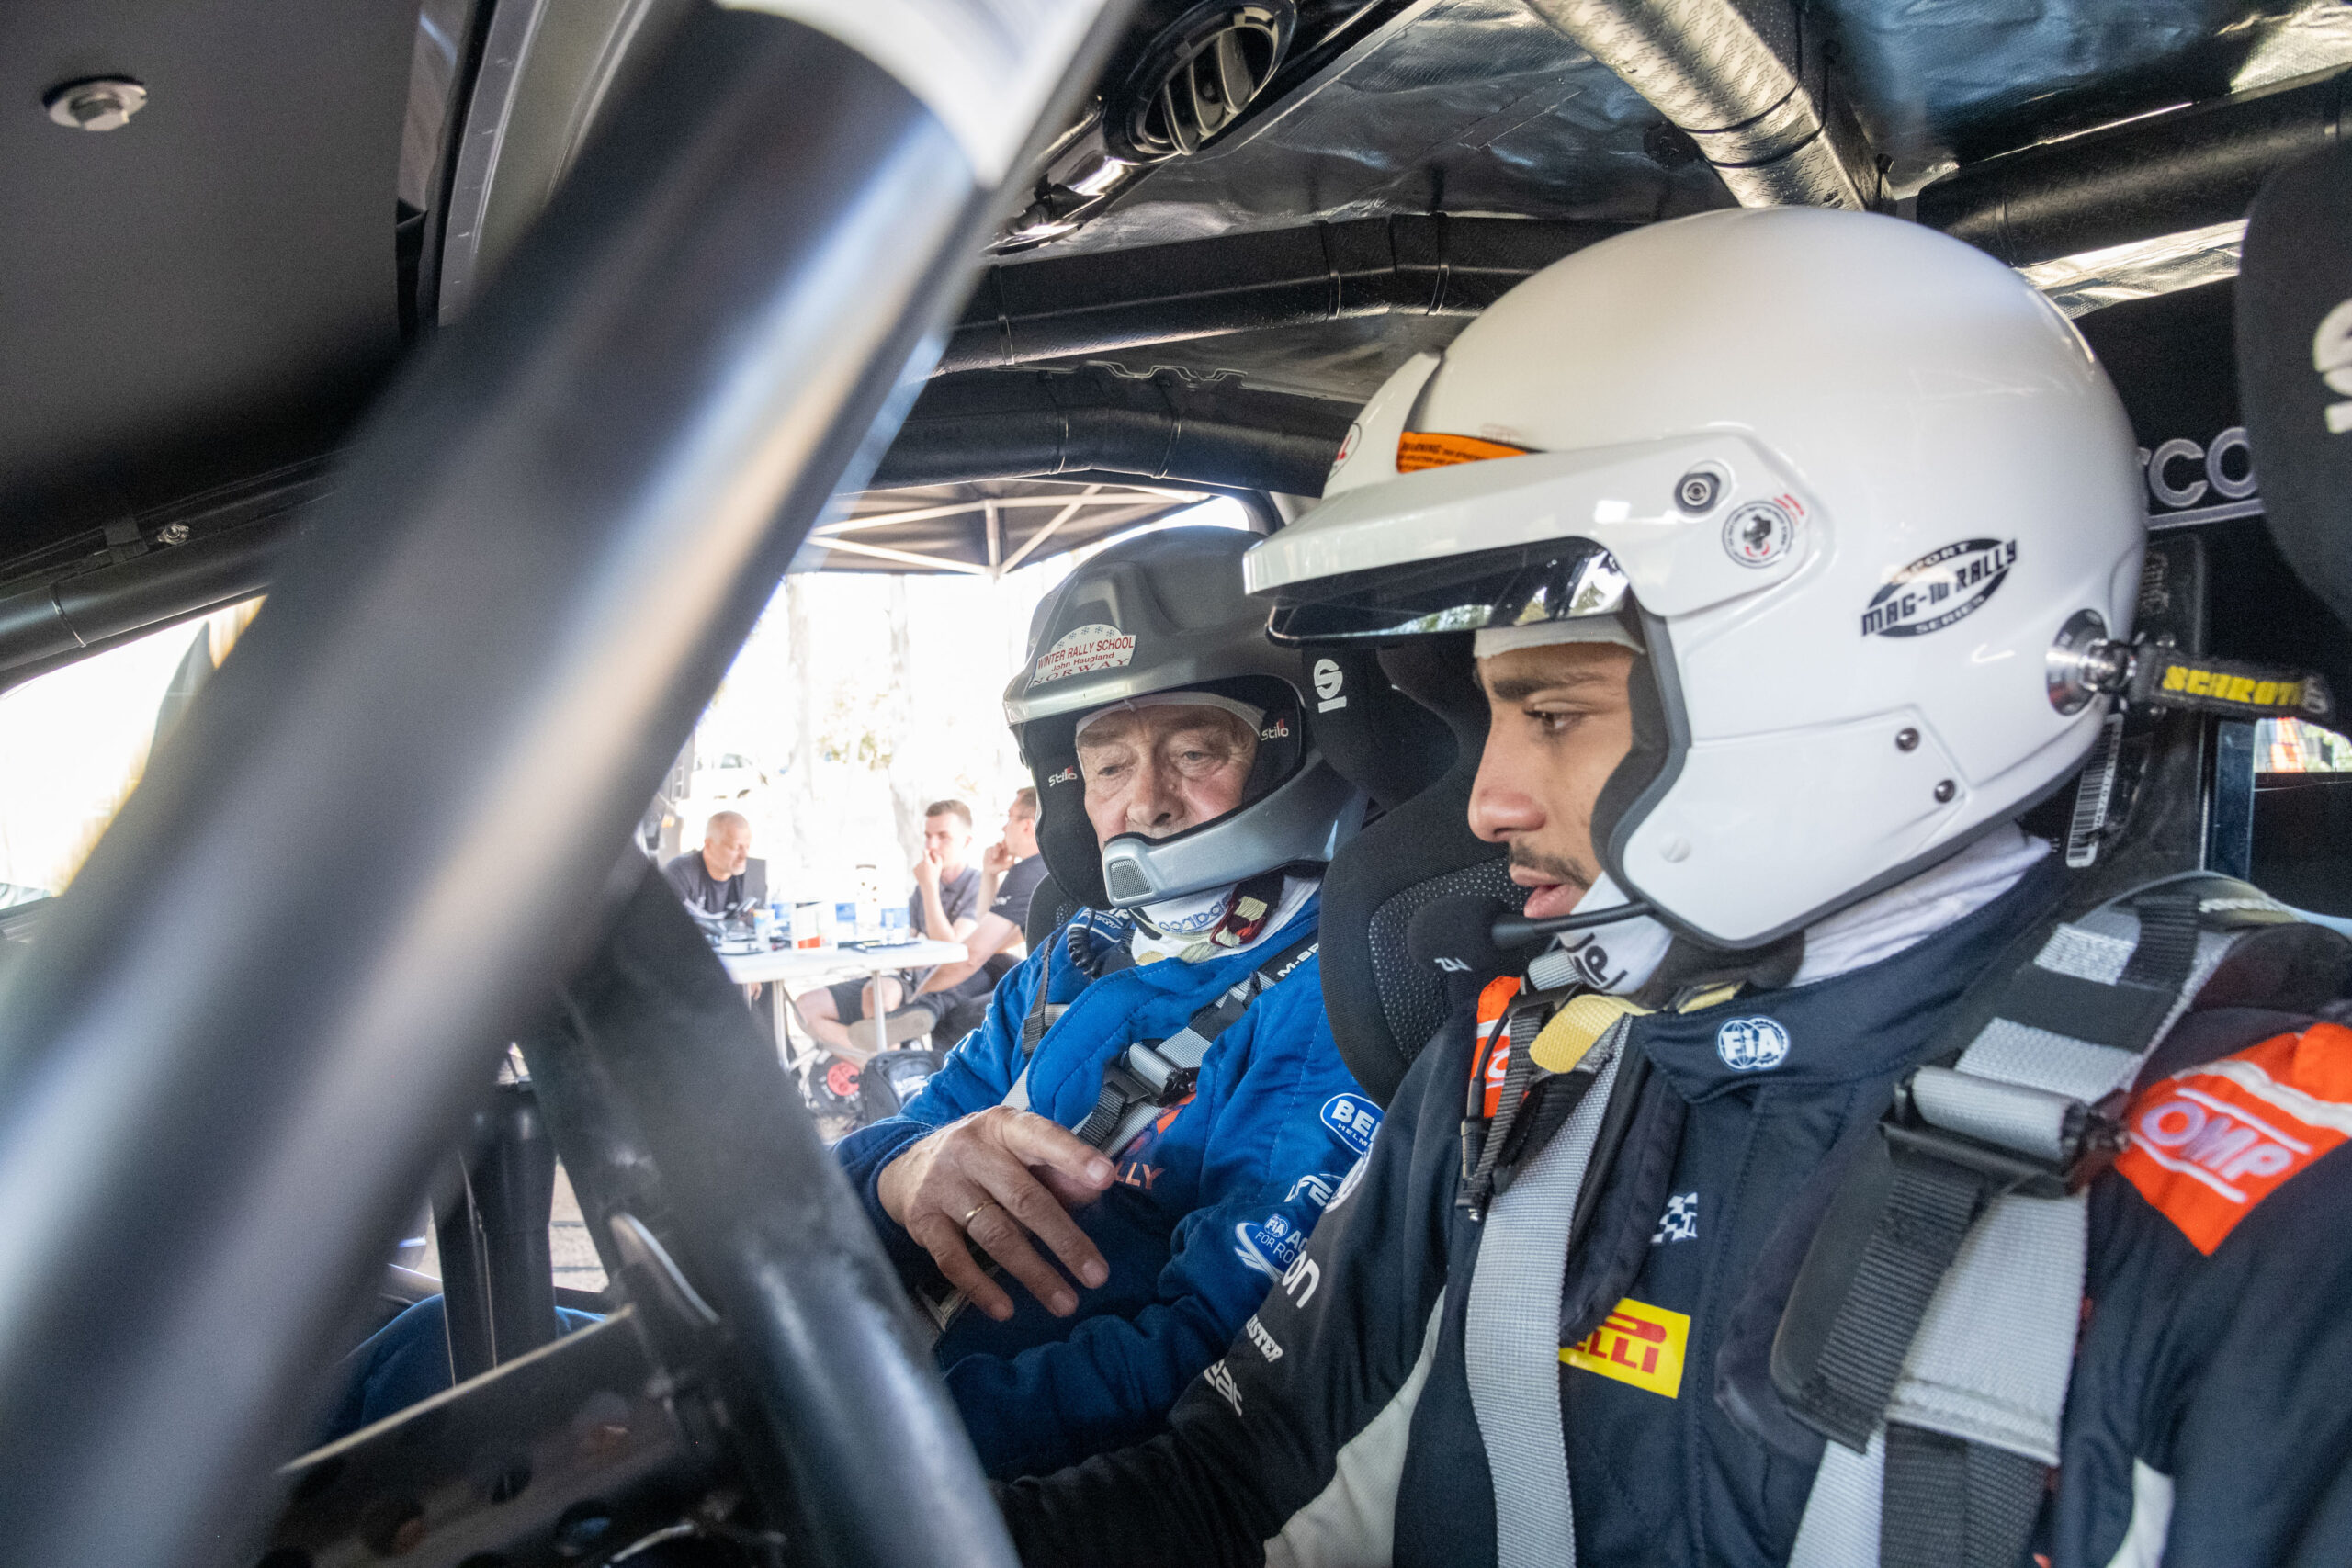 FIA Rally Star training camp - Abdullah Al-Tawqi and driver instructor John Haugland